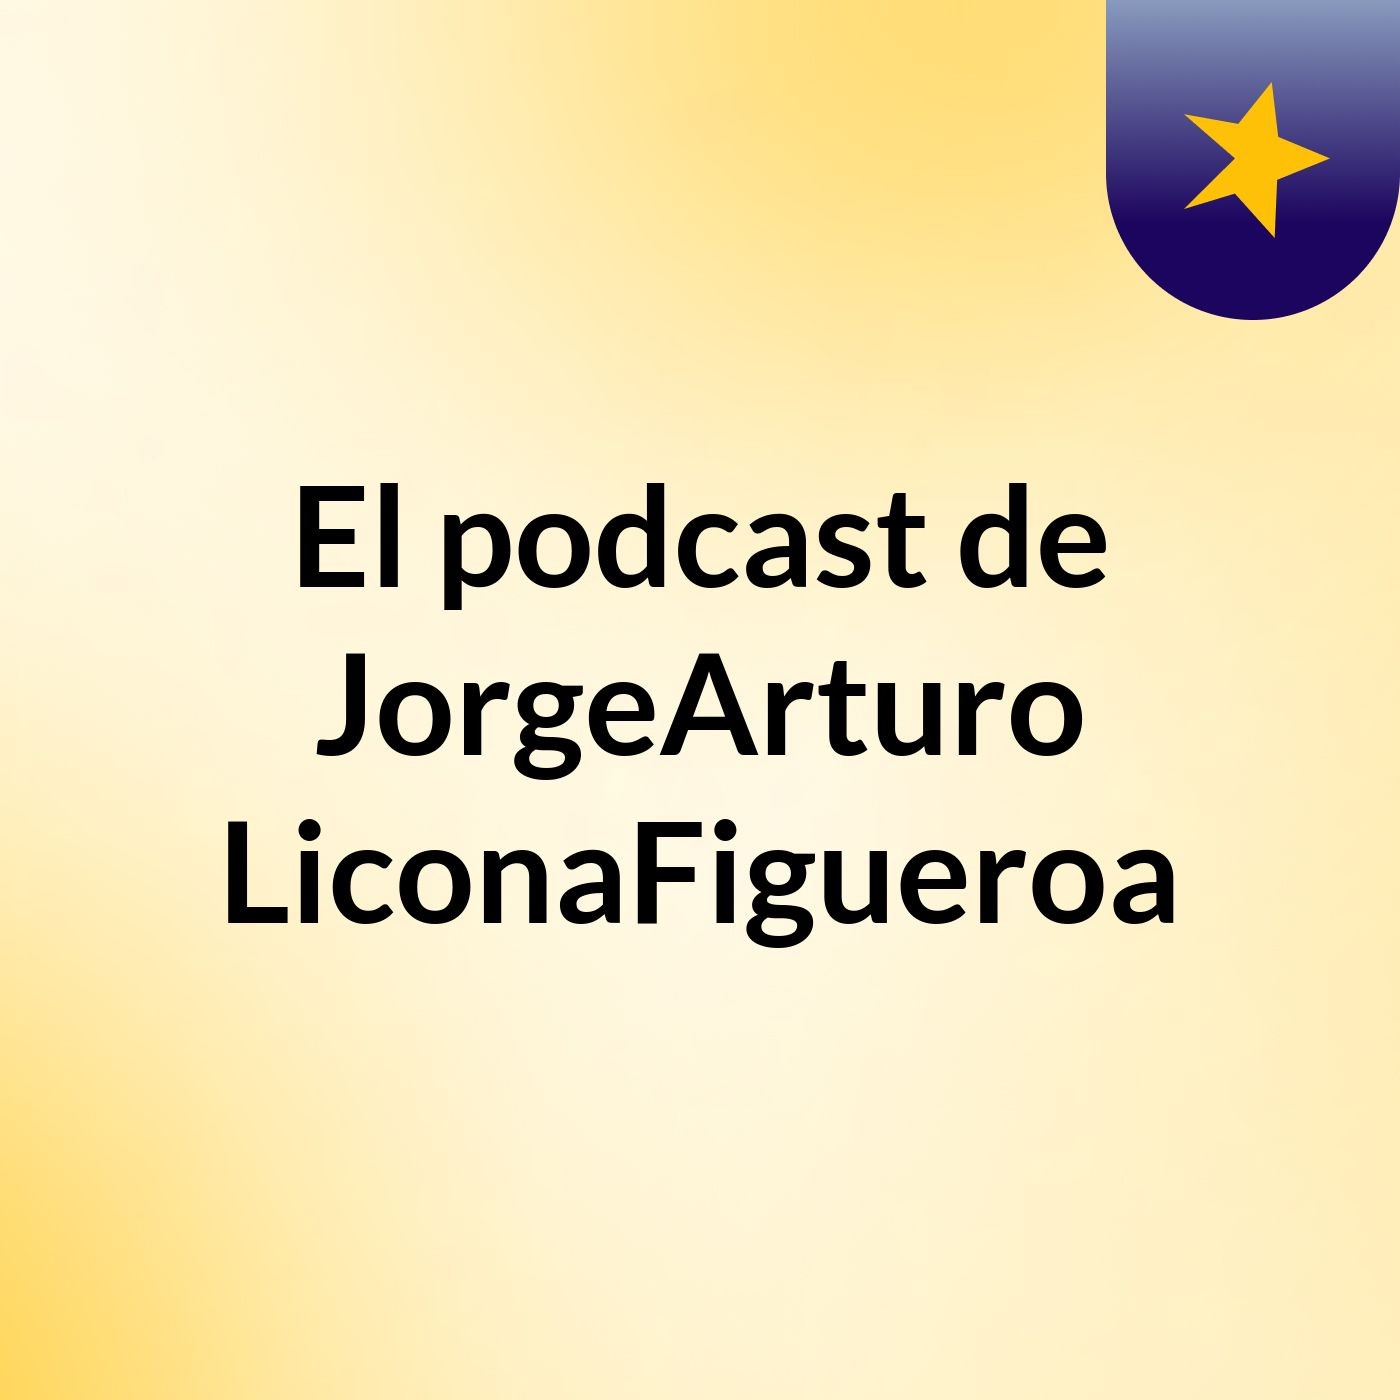 Episodio 7 - El podcast de JorgeArturo LiconaFigueroa